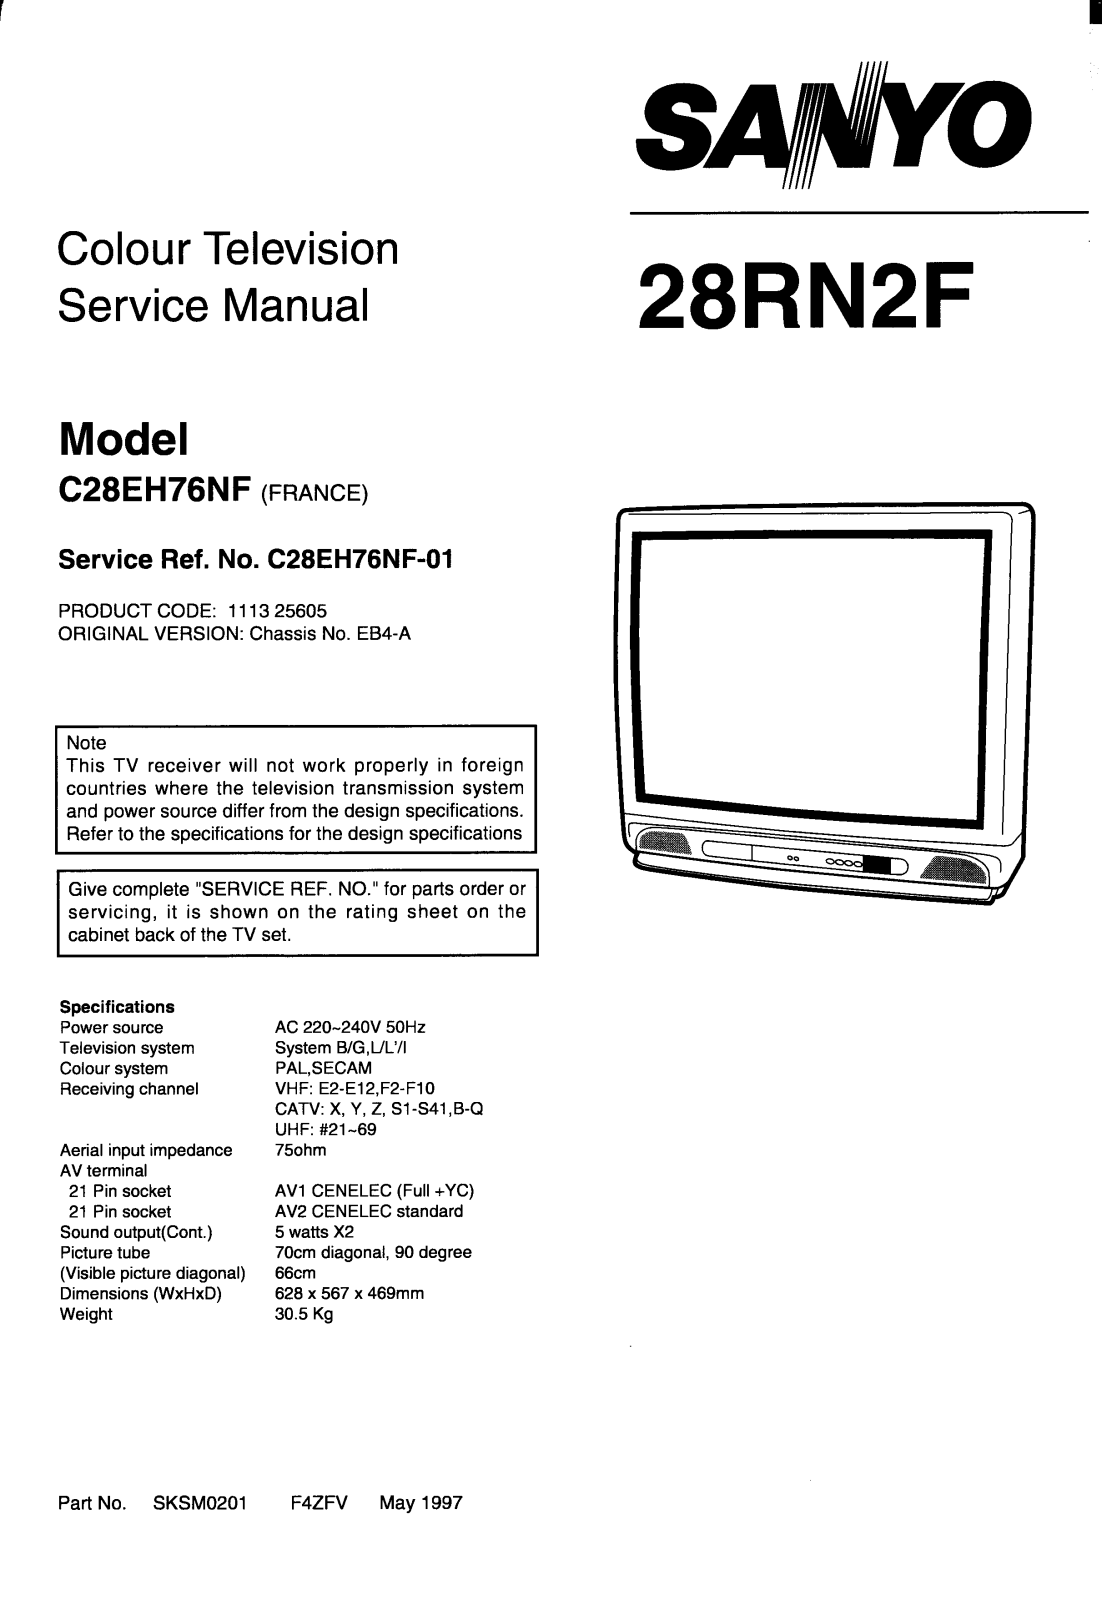 Sanyo C28EH76NF, 28RN2F User Manual